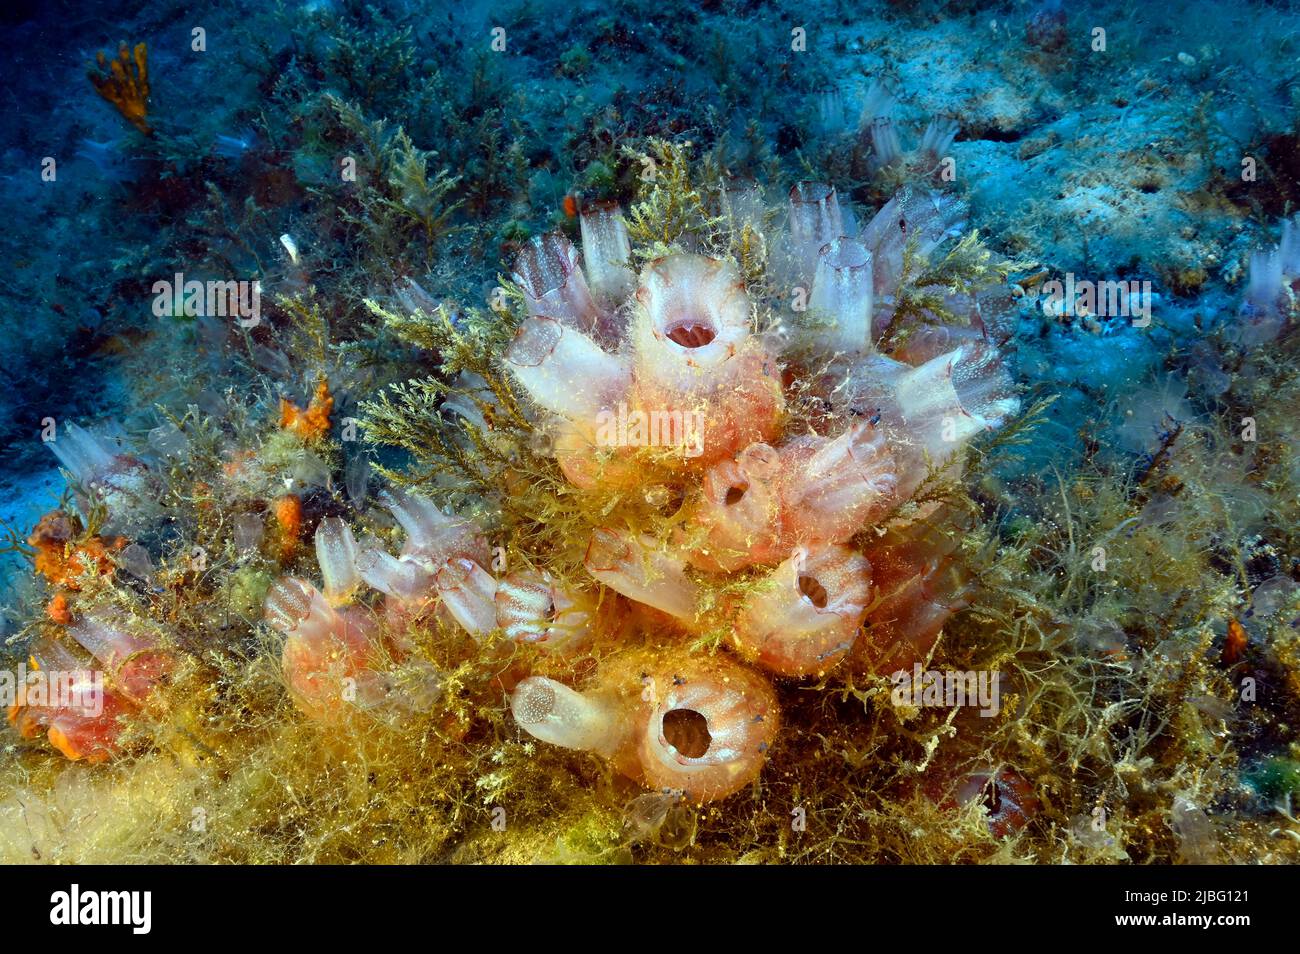 Invasivo scoiattolo marino, Herdmania momus, Kas Antalya Turchia Foto Stock